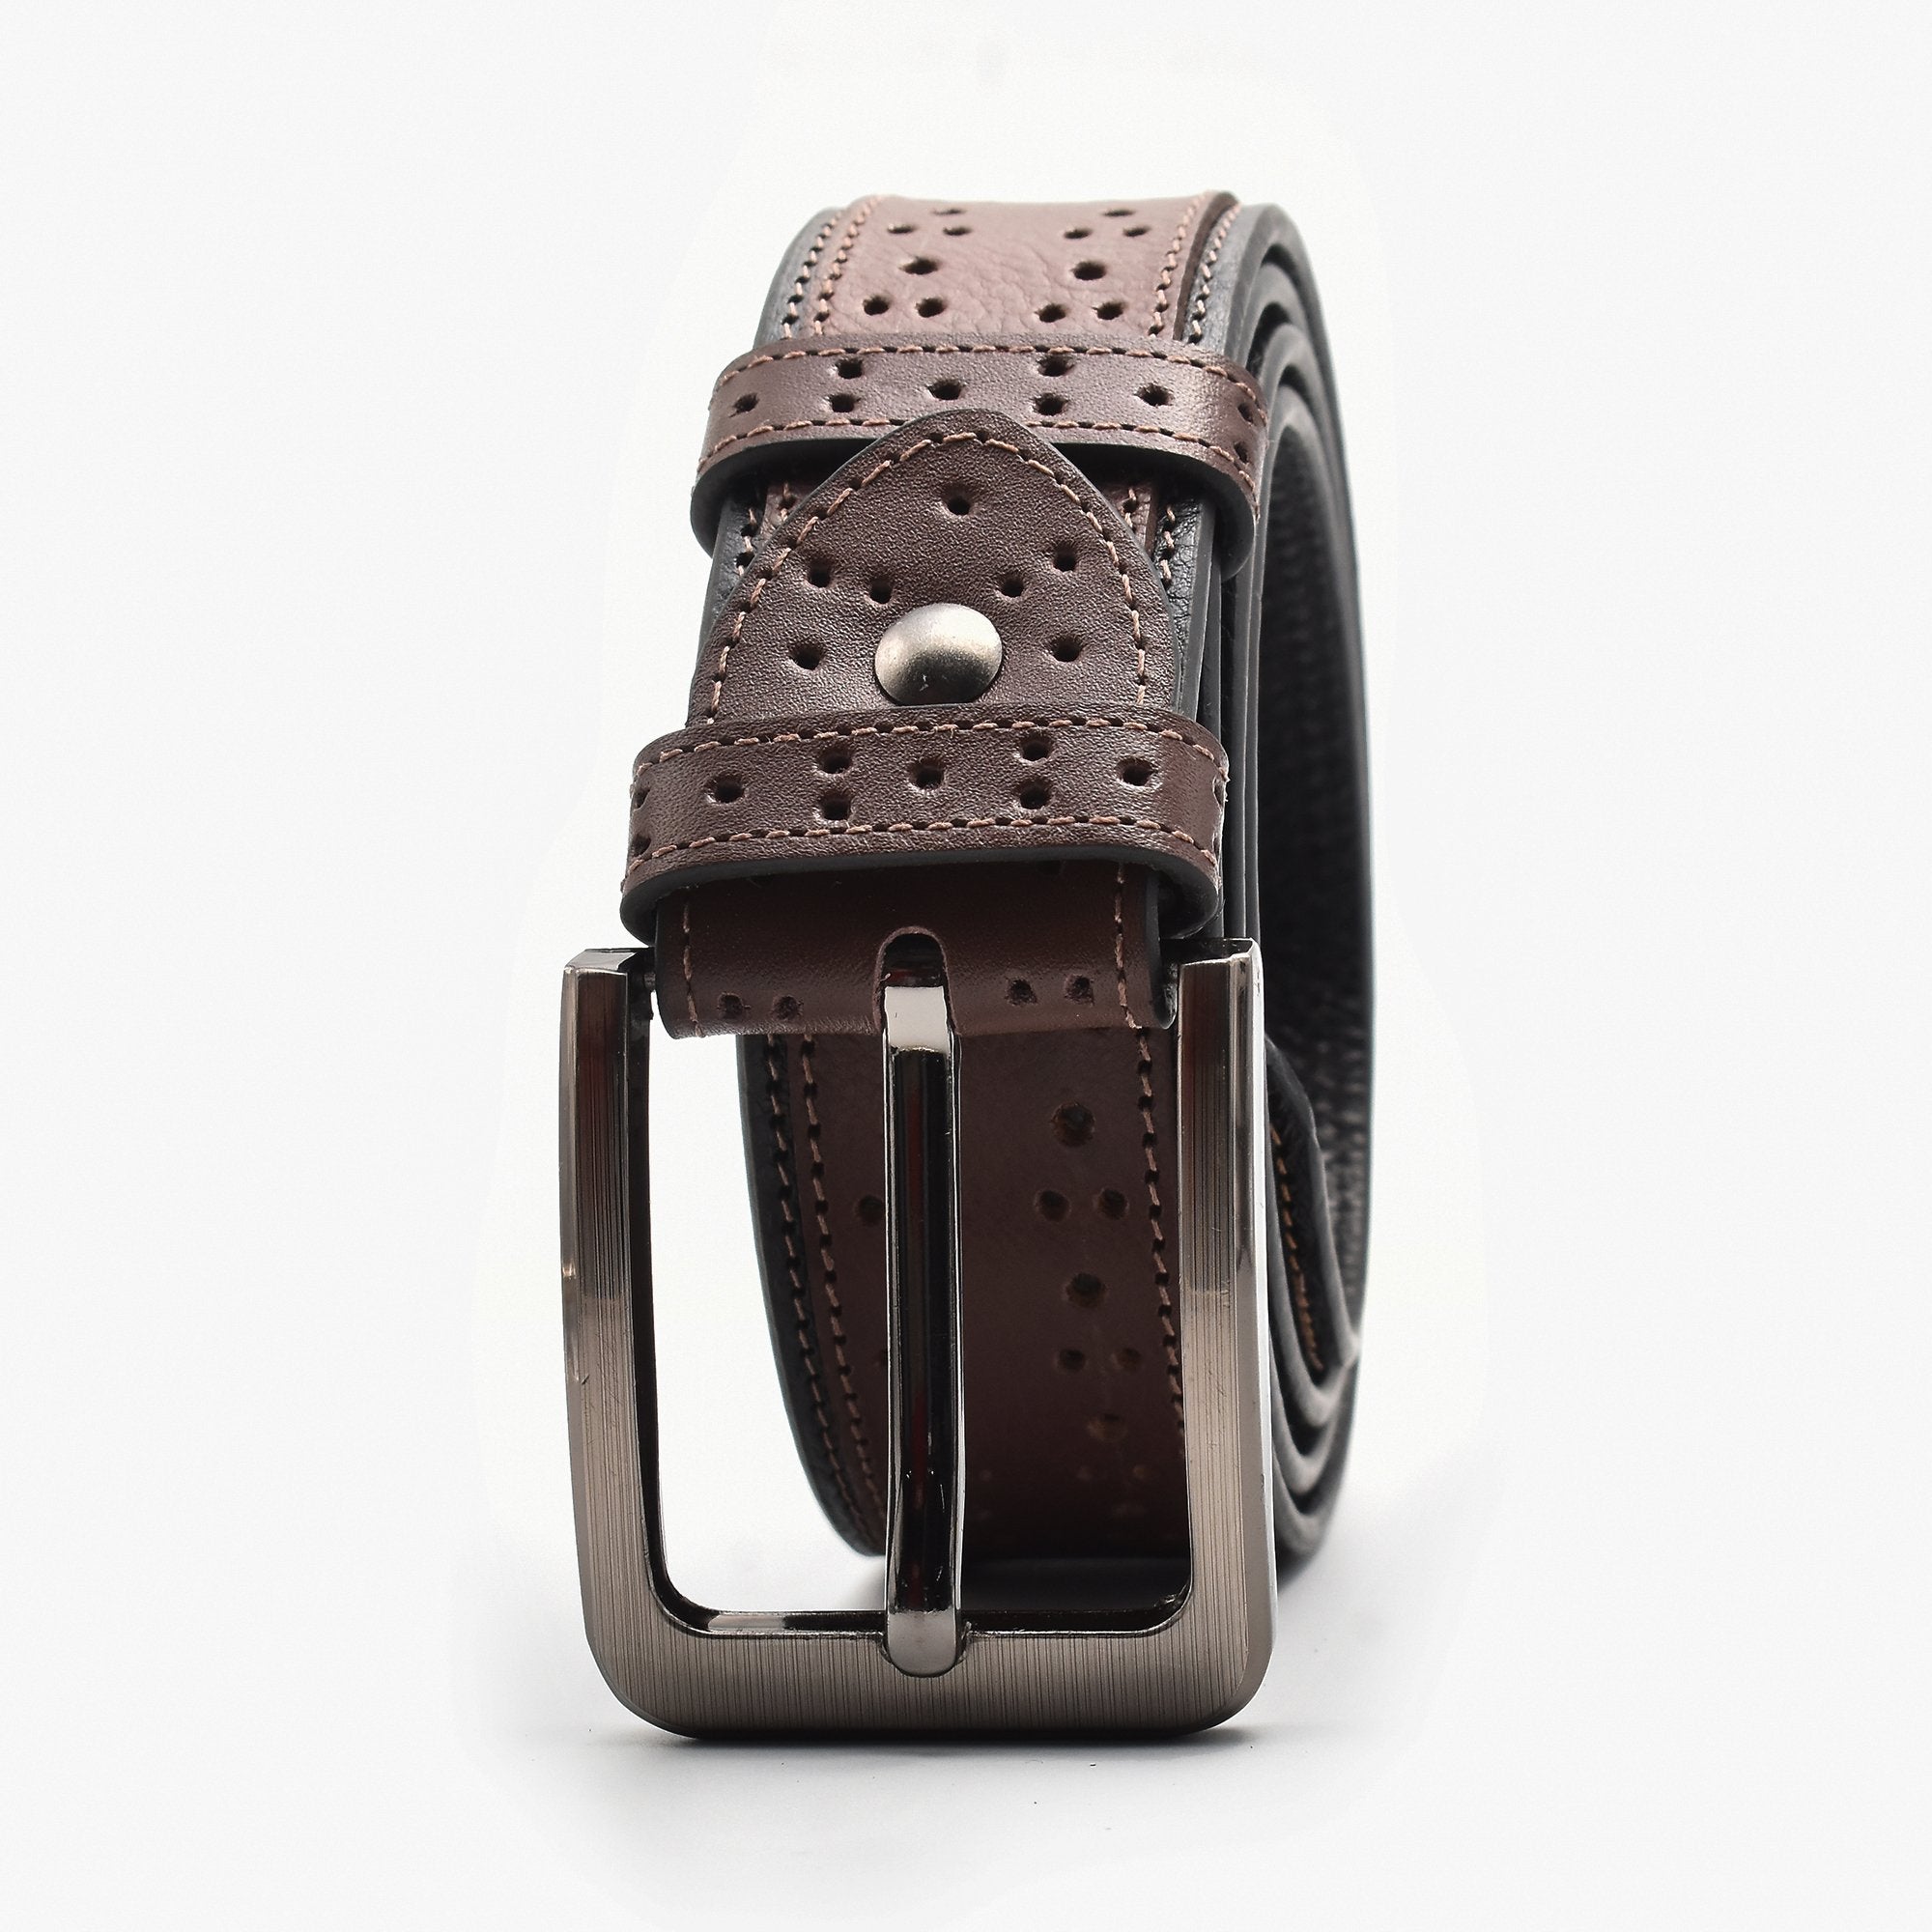 Zays Leather Belt for Men - (Chocolate) ZAYSBL07